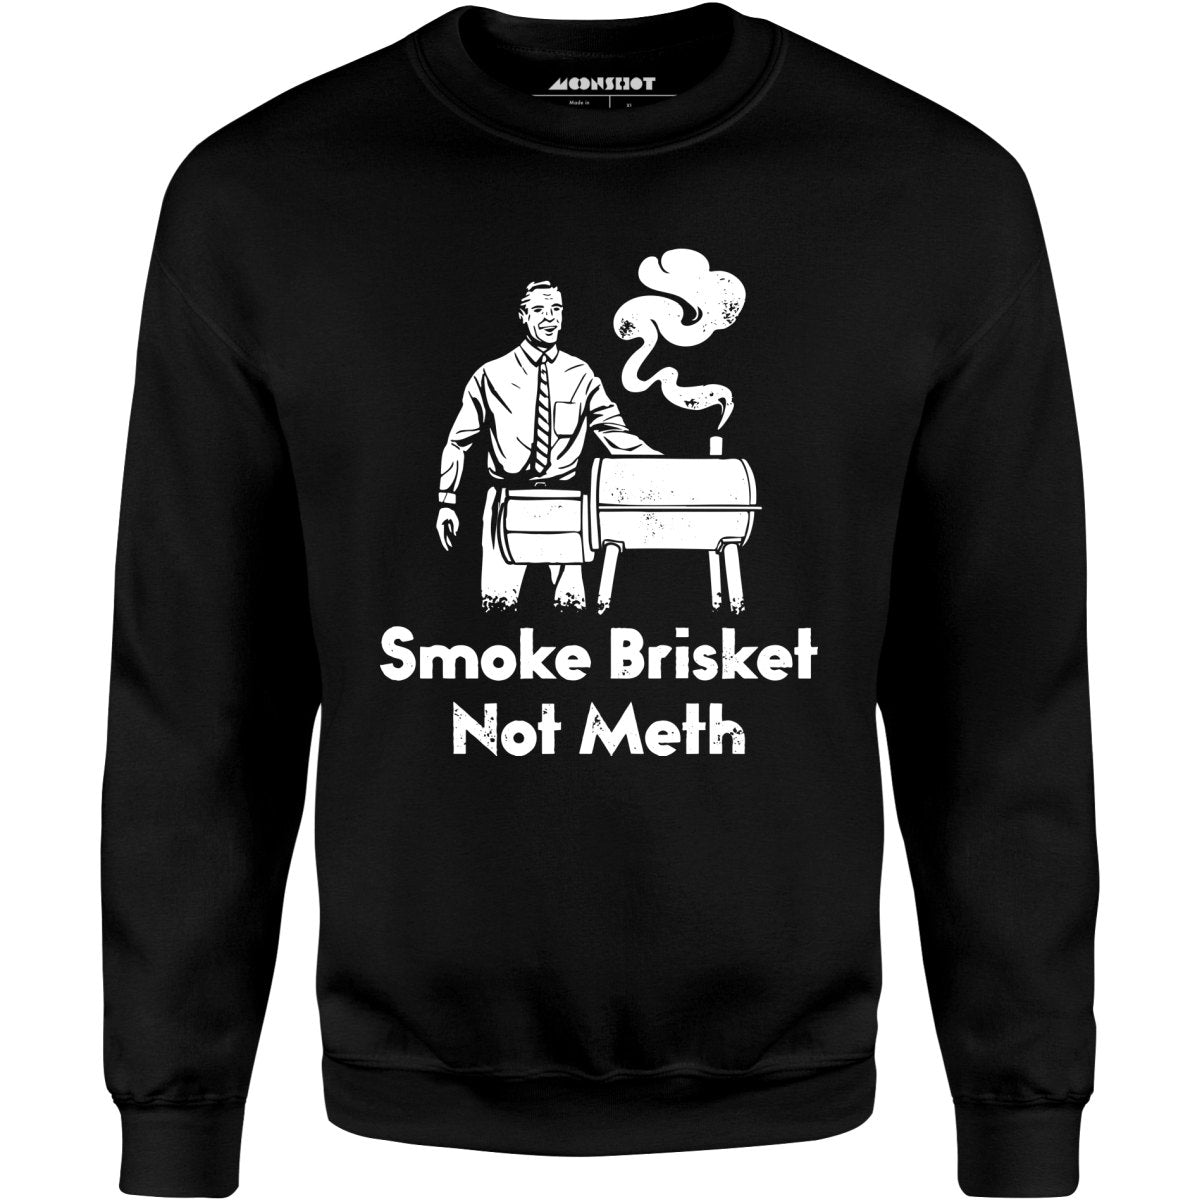 Smoke Brisket Not Meth - Unisex Sweatshirt